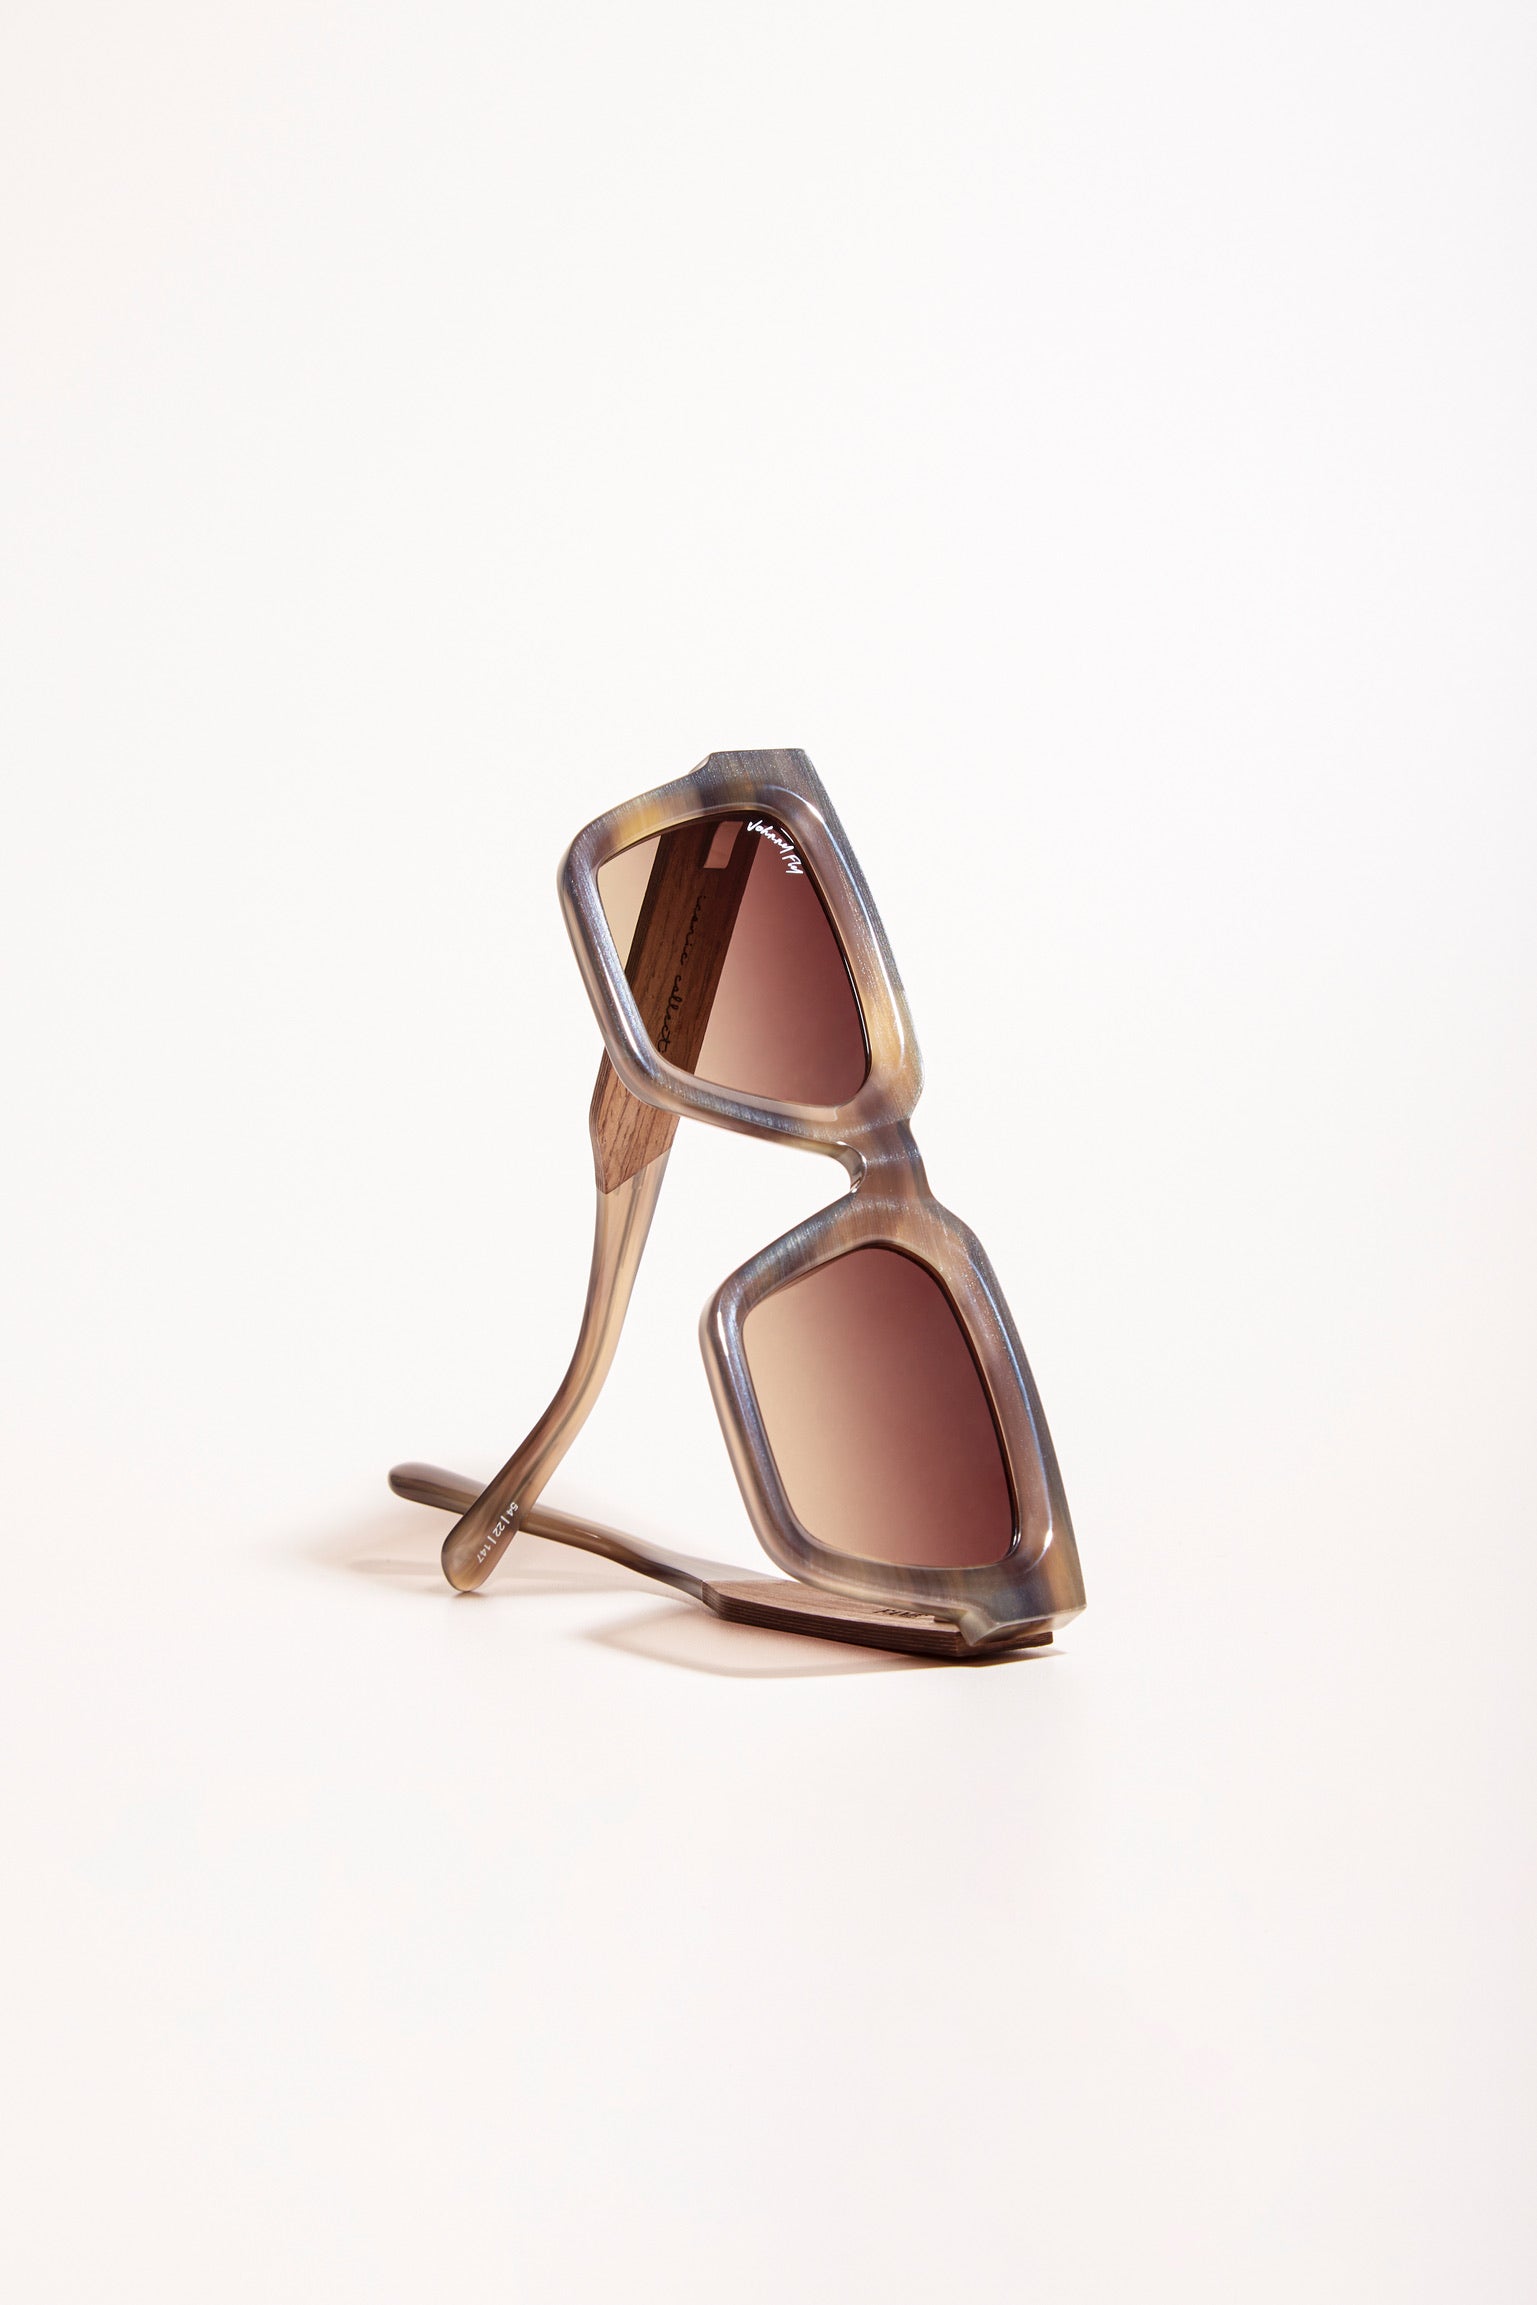 Louis Vuitton LV Fame Oval Sunglasses Cream Acetate. Size W